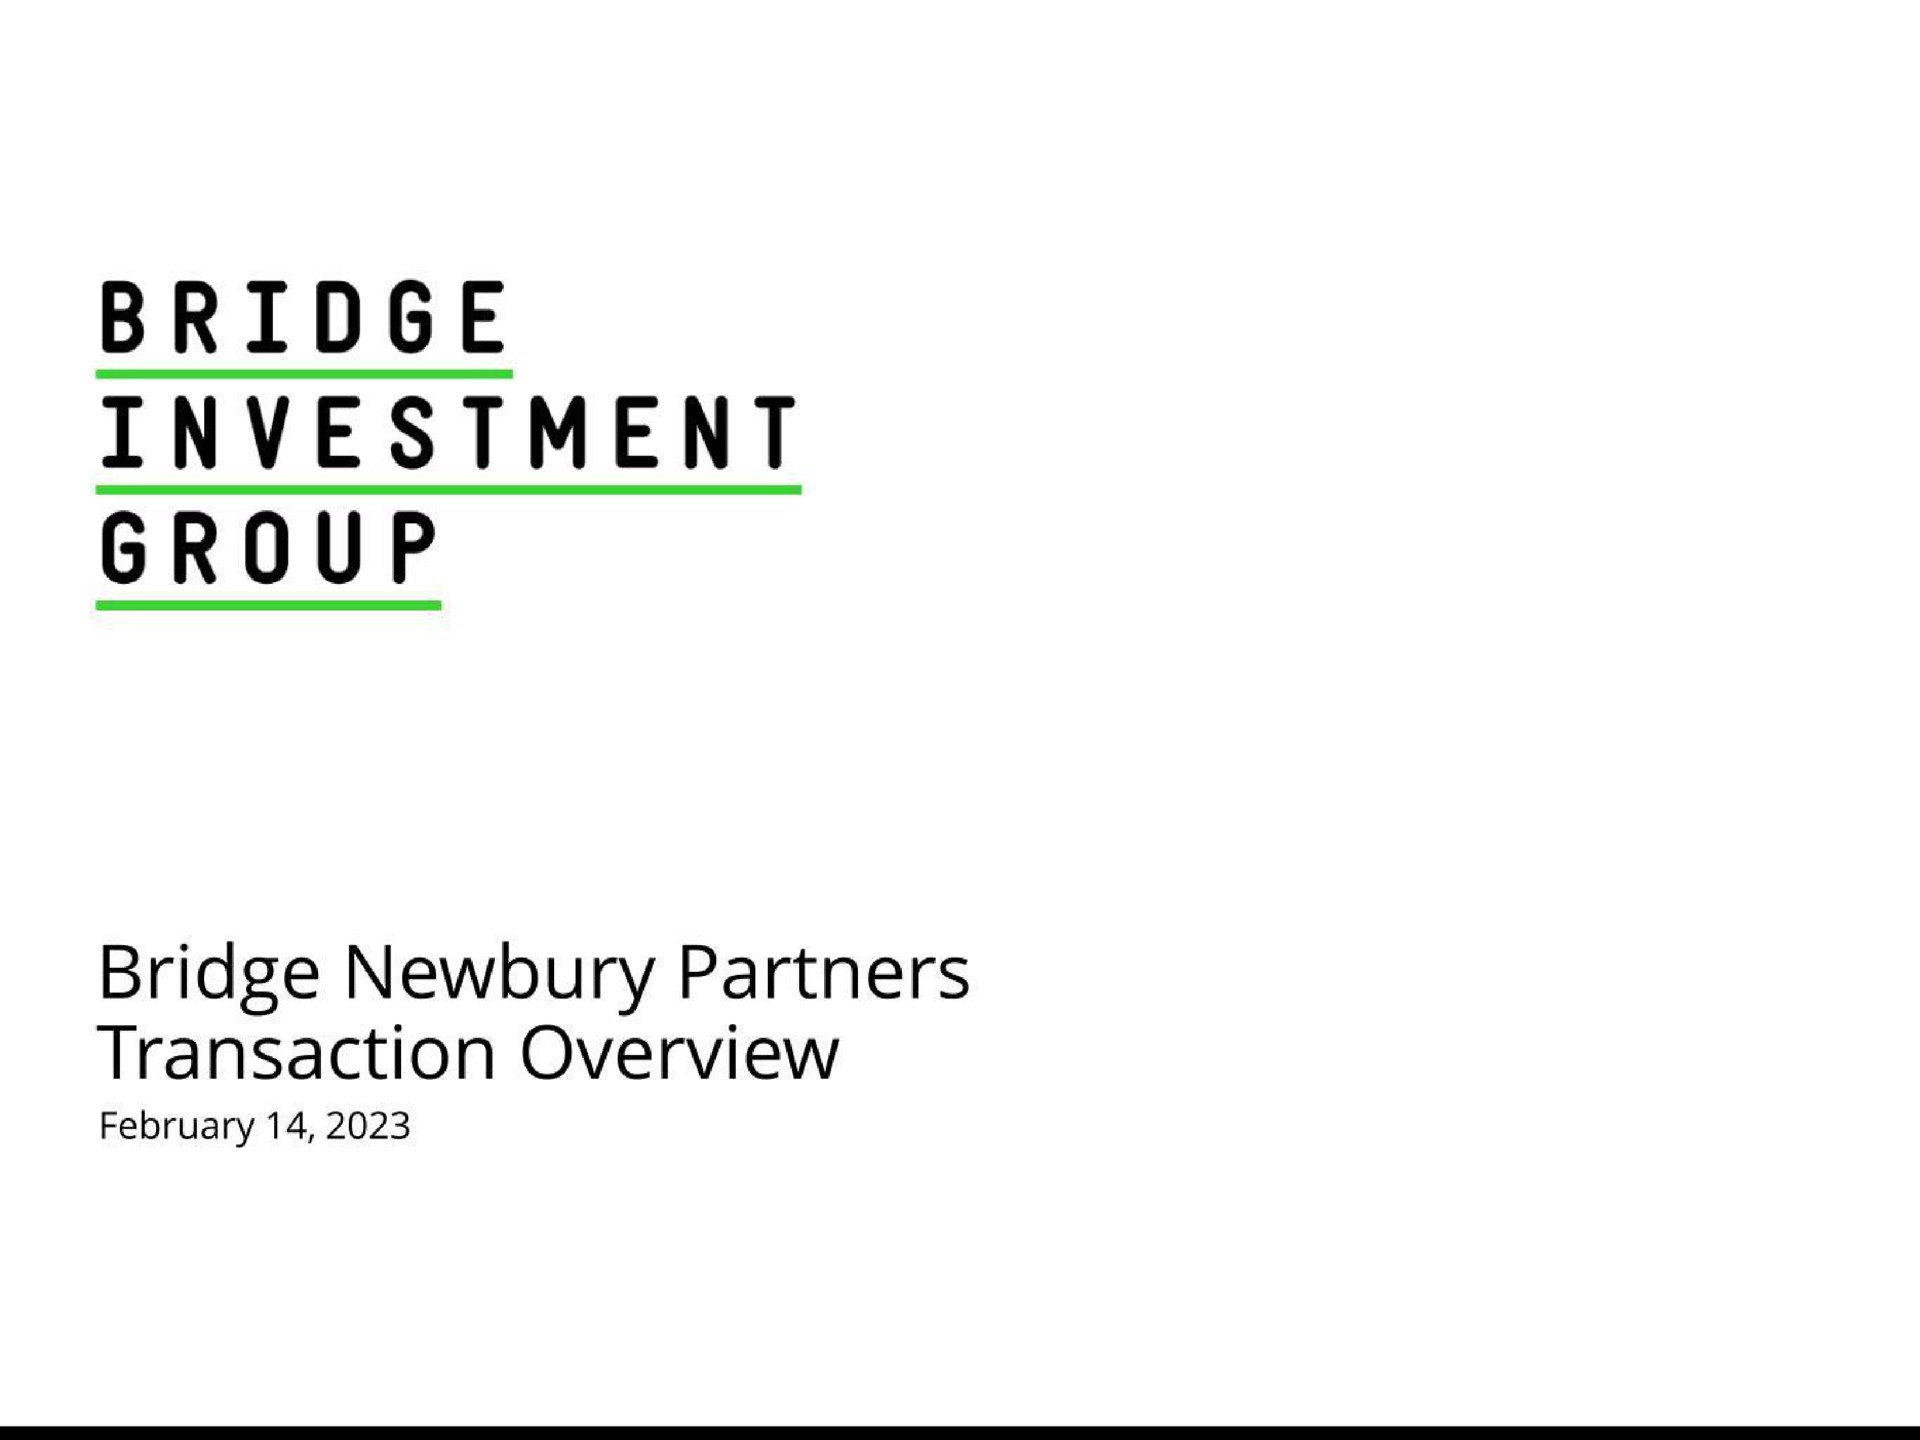 bridge investment group bridge partners transaction overview | Bridge Investment Group